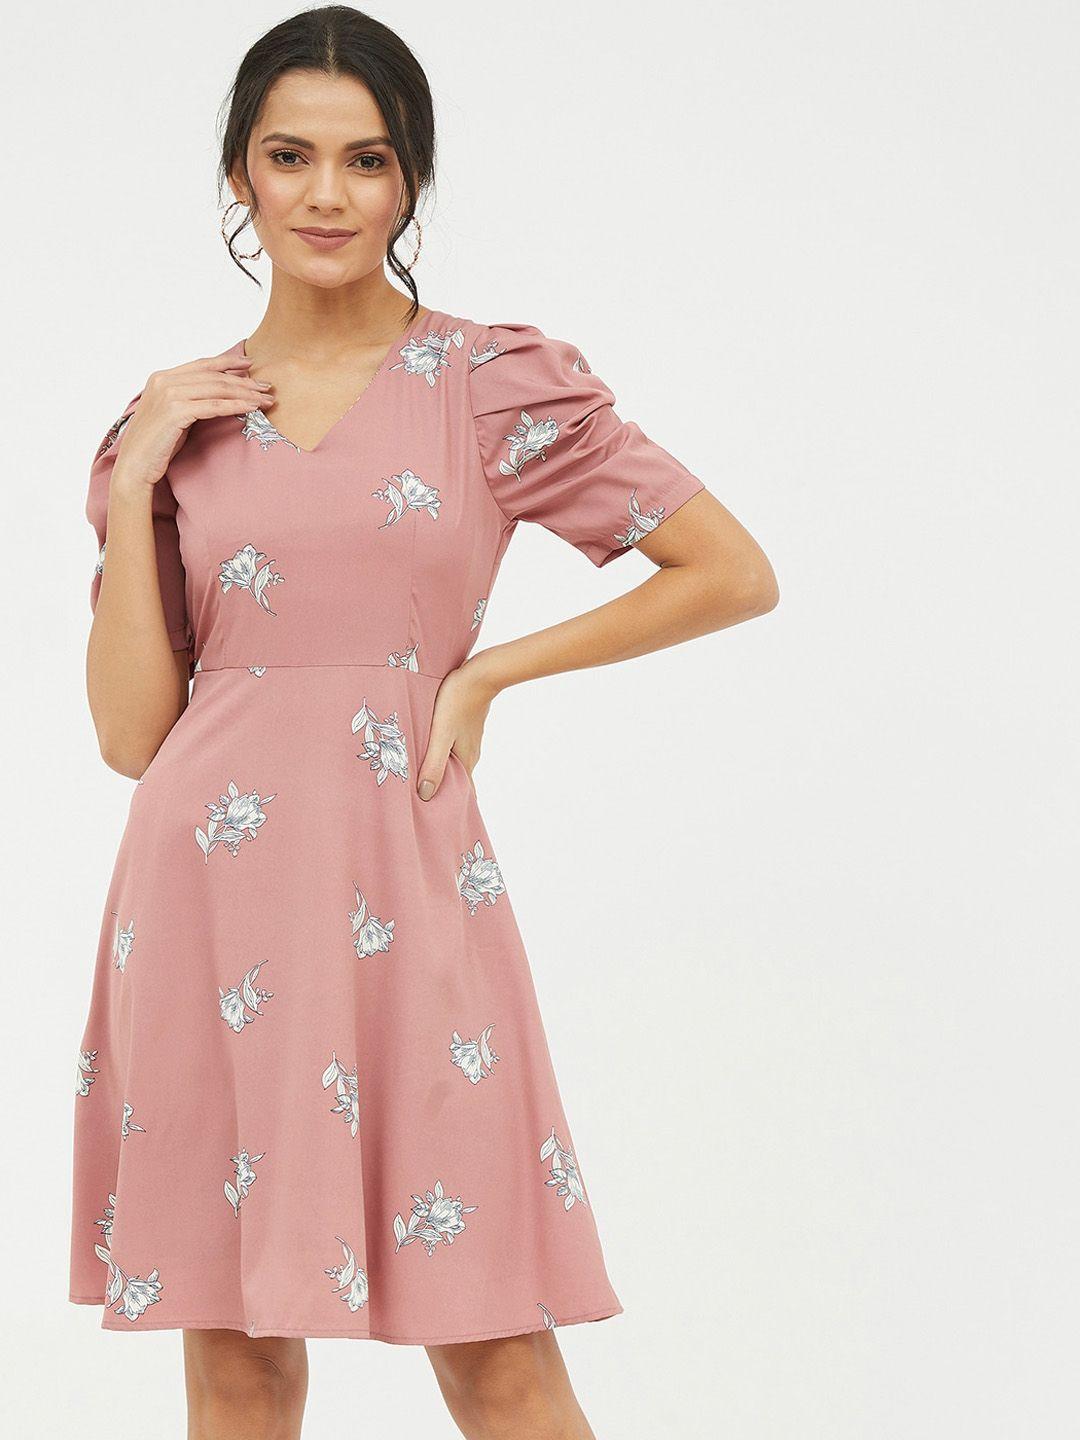 harpa-pink-&-white-floral-dress